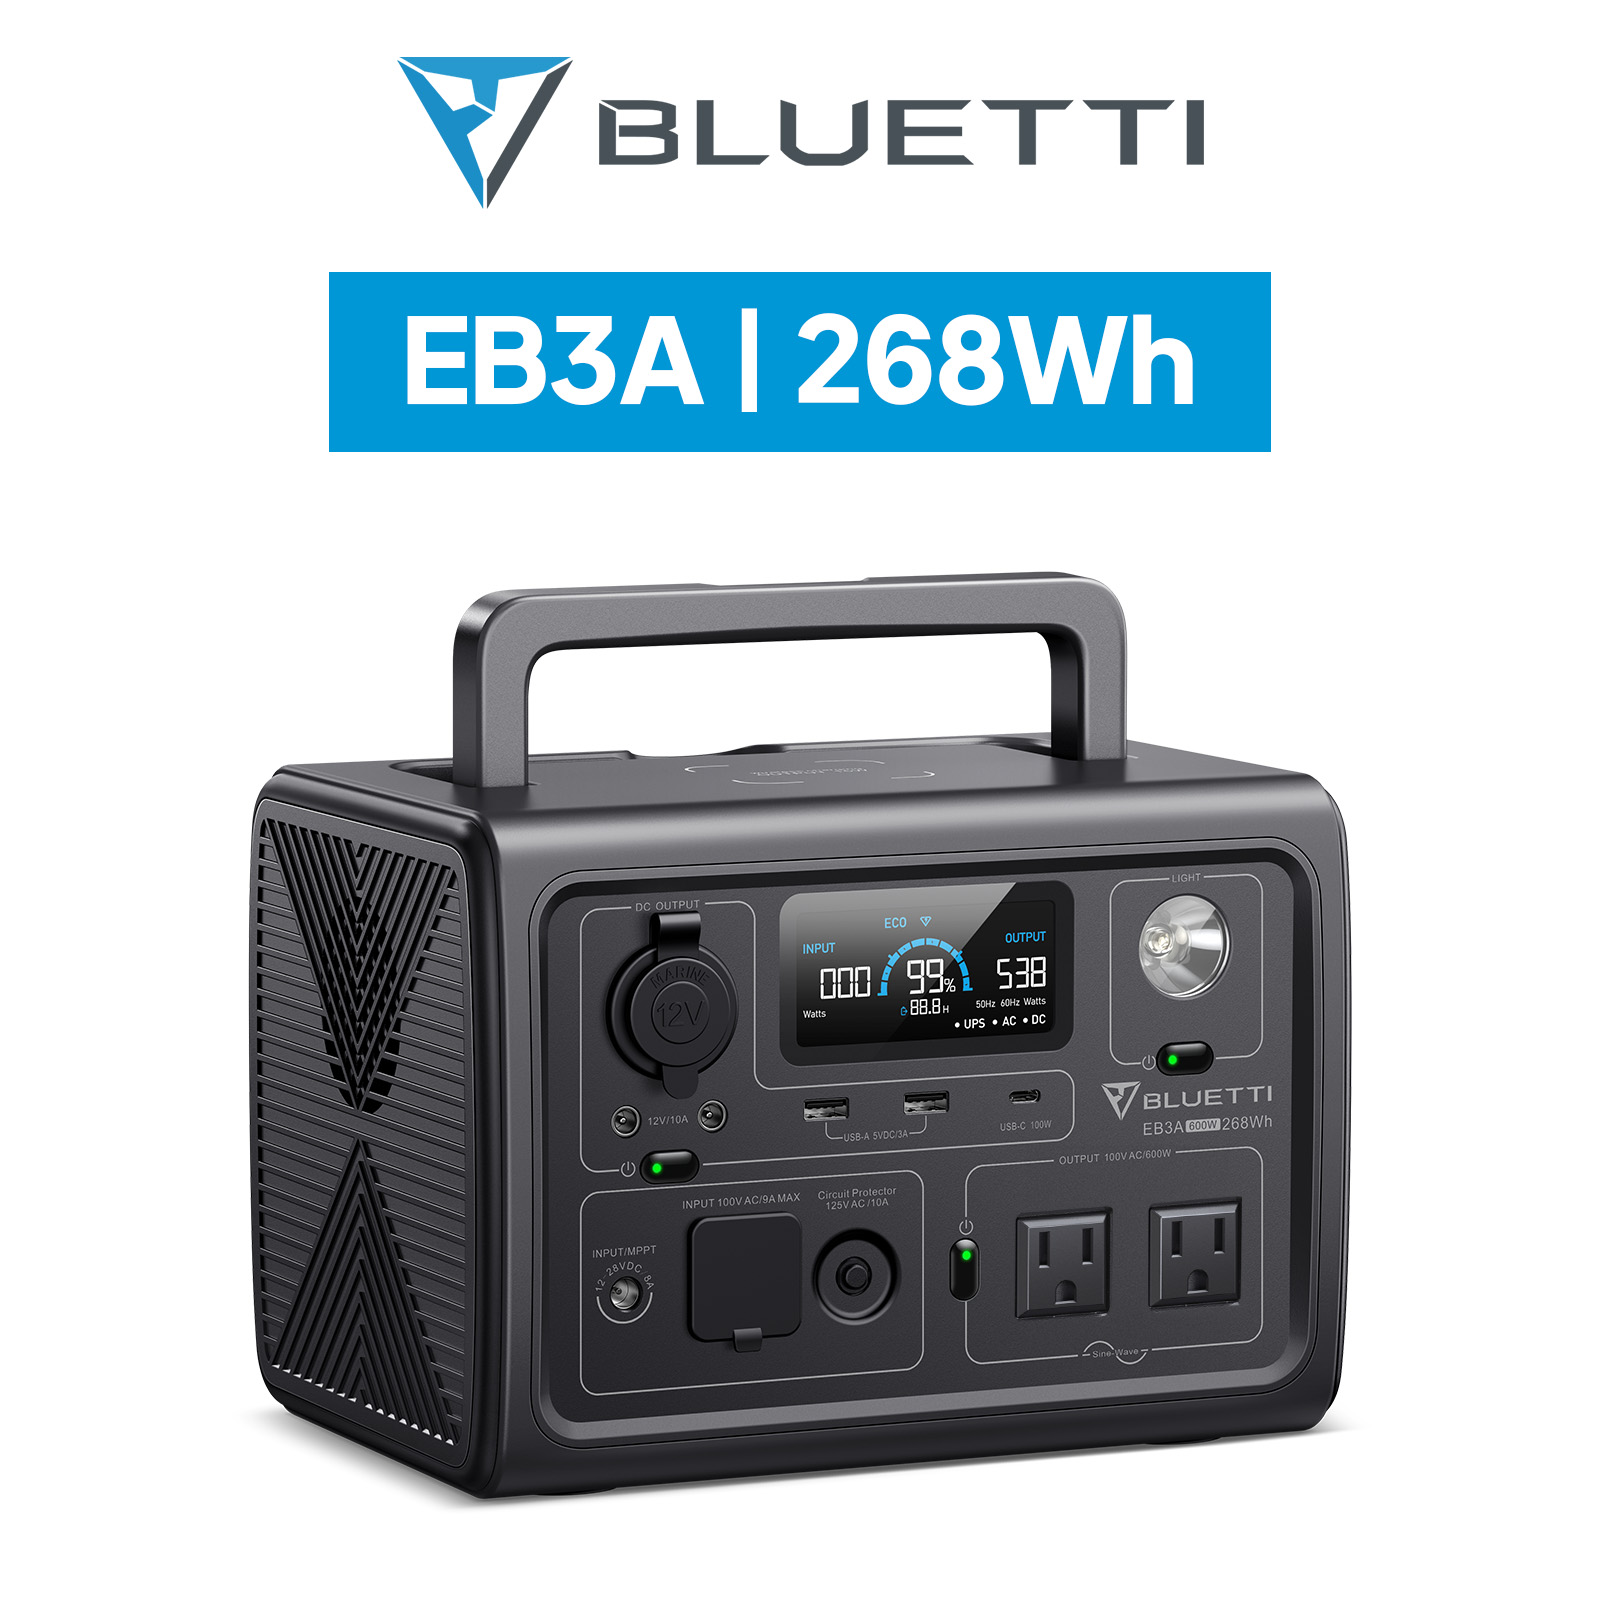 BLUETTI ポータブル電源 EB3A スチールグレー 268Wh/600W 軽量 小型 